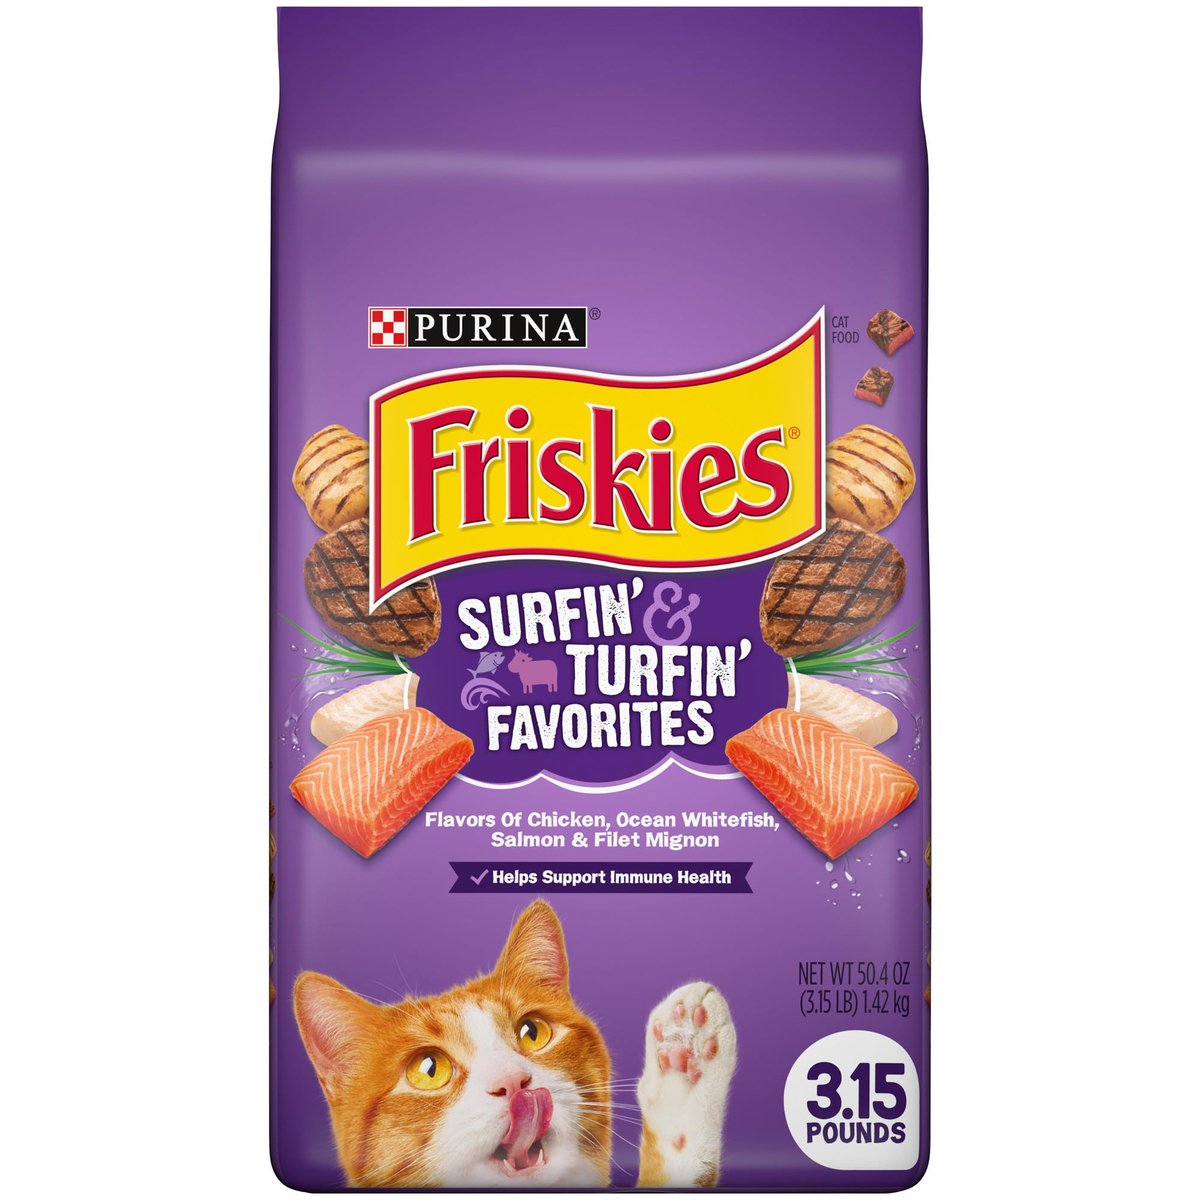 Purina Friskies Surfin' & Turfin' Favourite Cat Dry Food 1.42kg